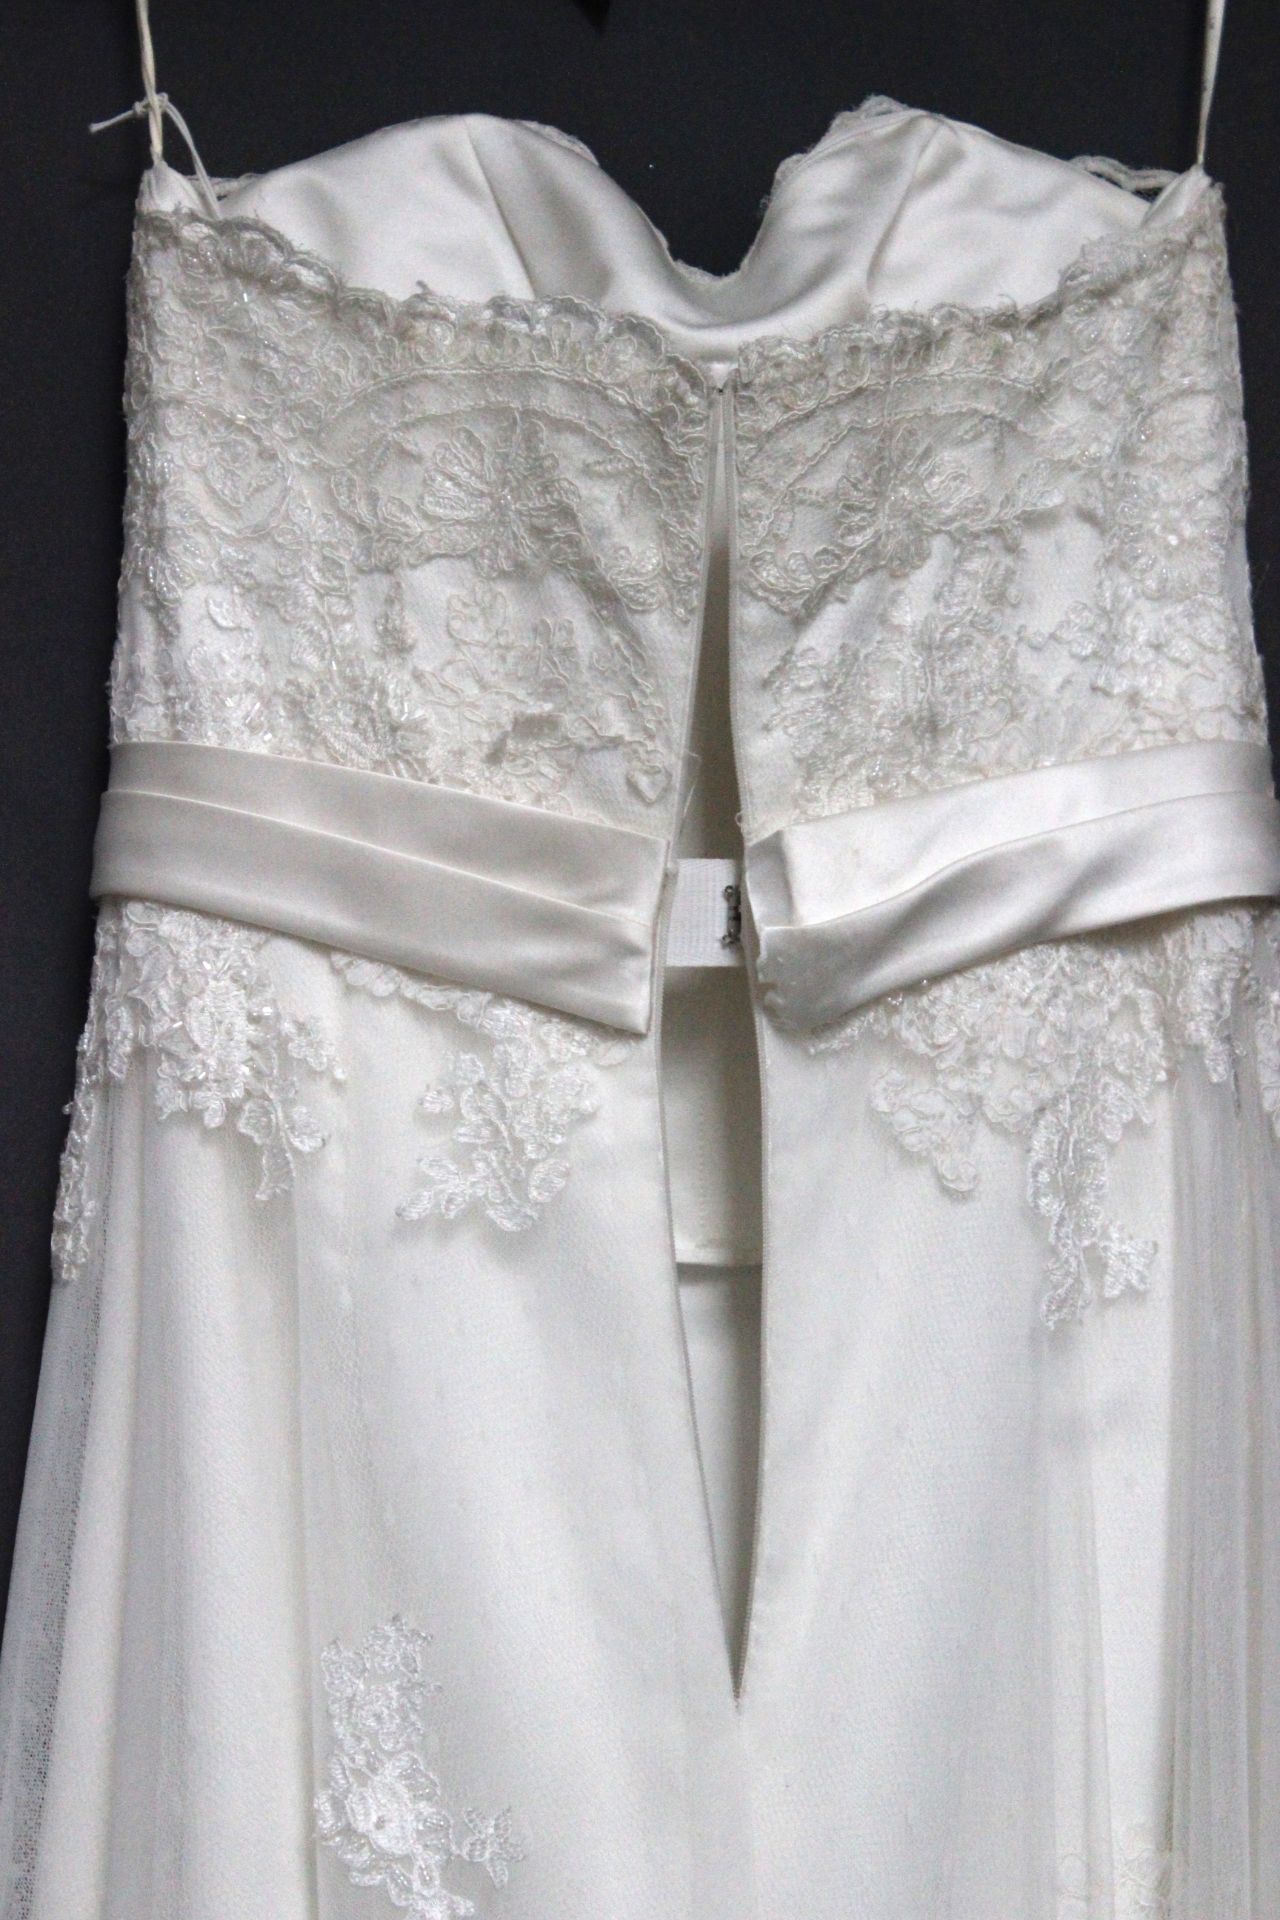 1 x ALAN HANNAH/LM 'Rachana' Strapless Lace And Beaded Designer Wedding Dress RRP £2,290 UK14 - Image 4 of 6